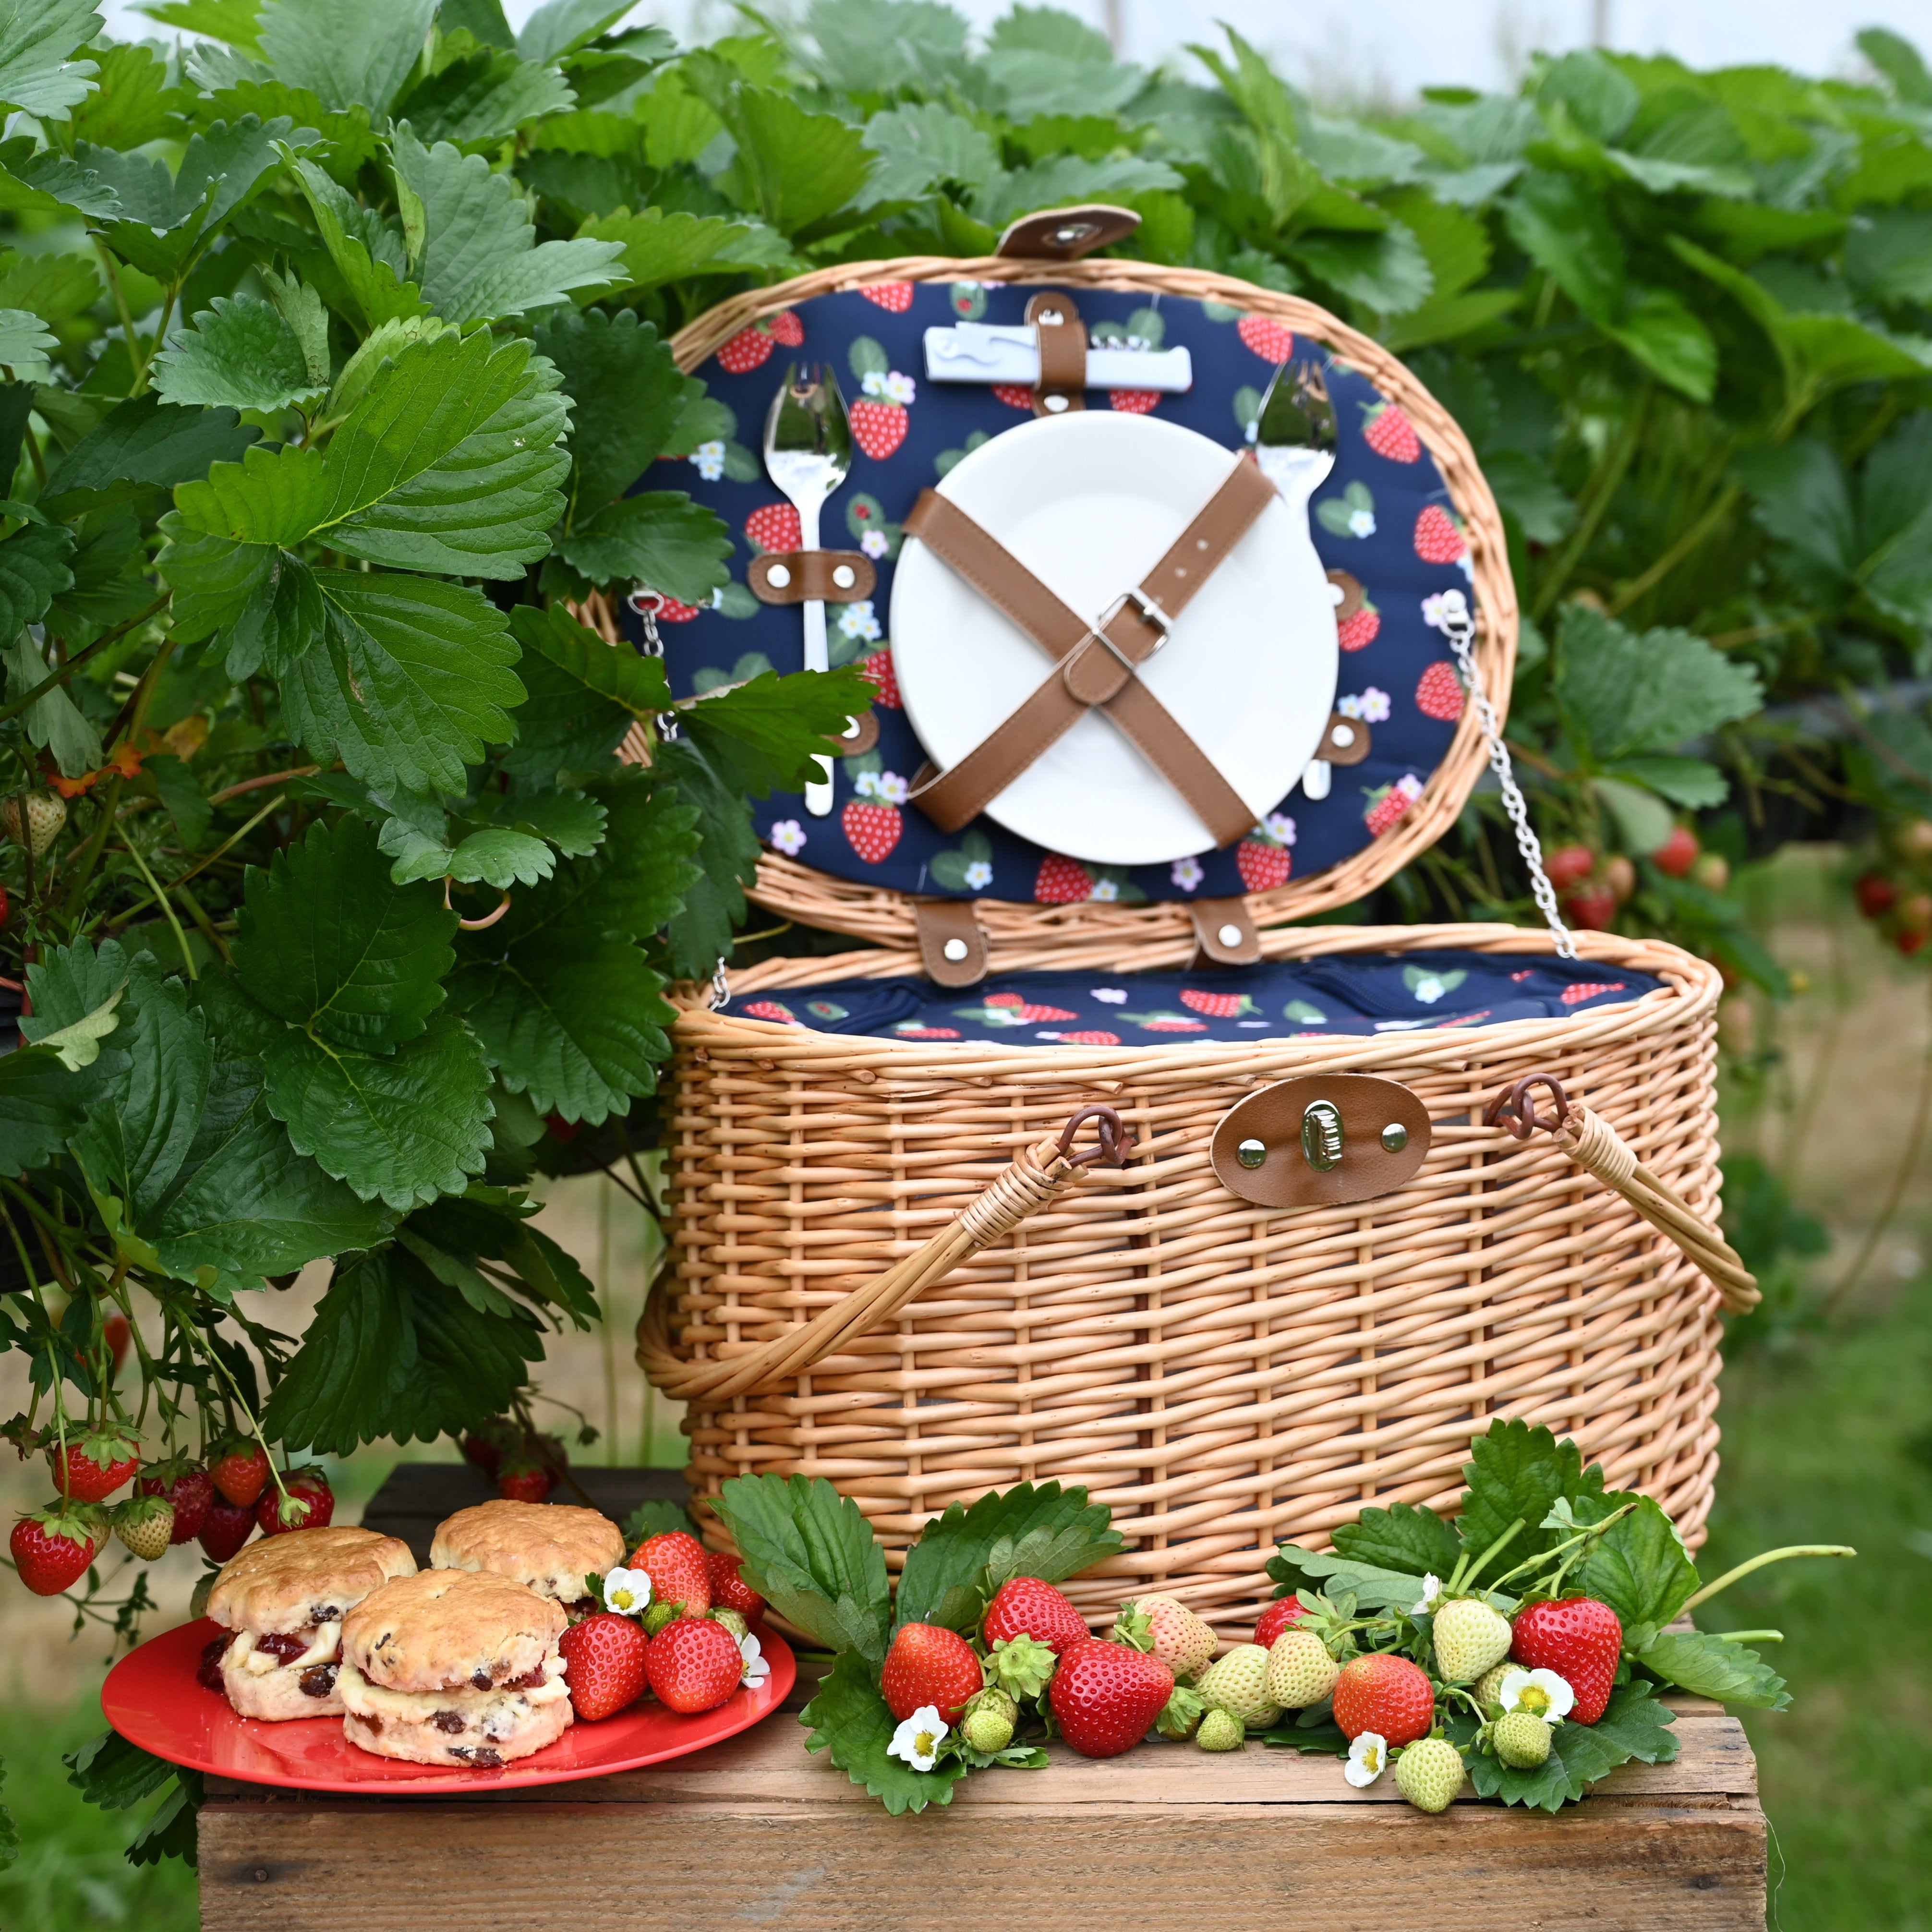 Strawberries & Cream 2 Person Insulated Wicker Picnic Basket Set